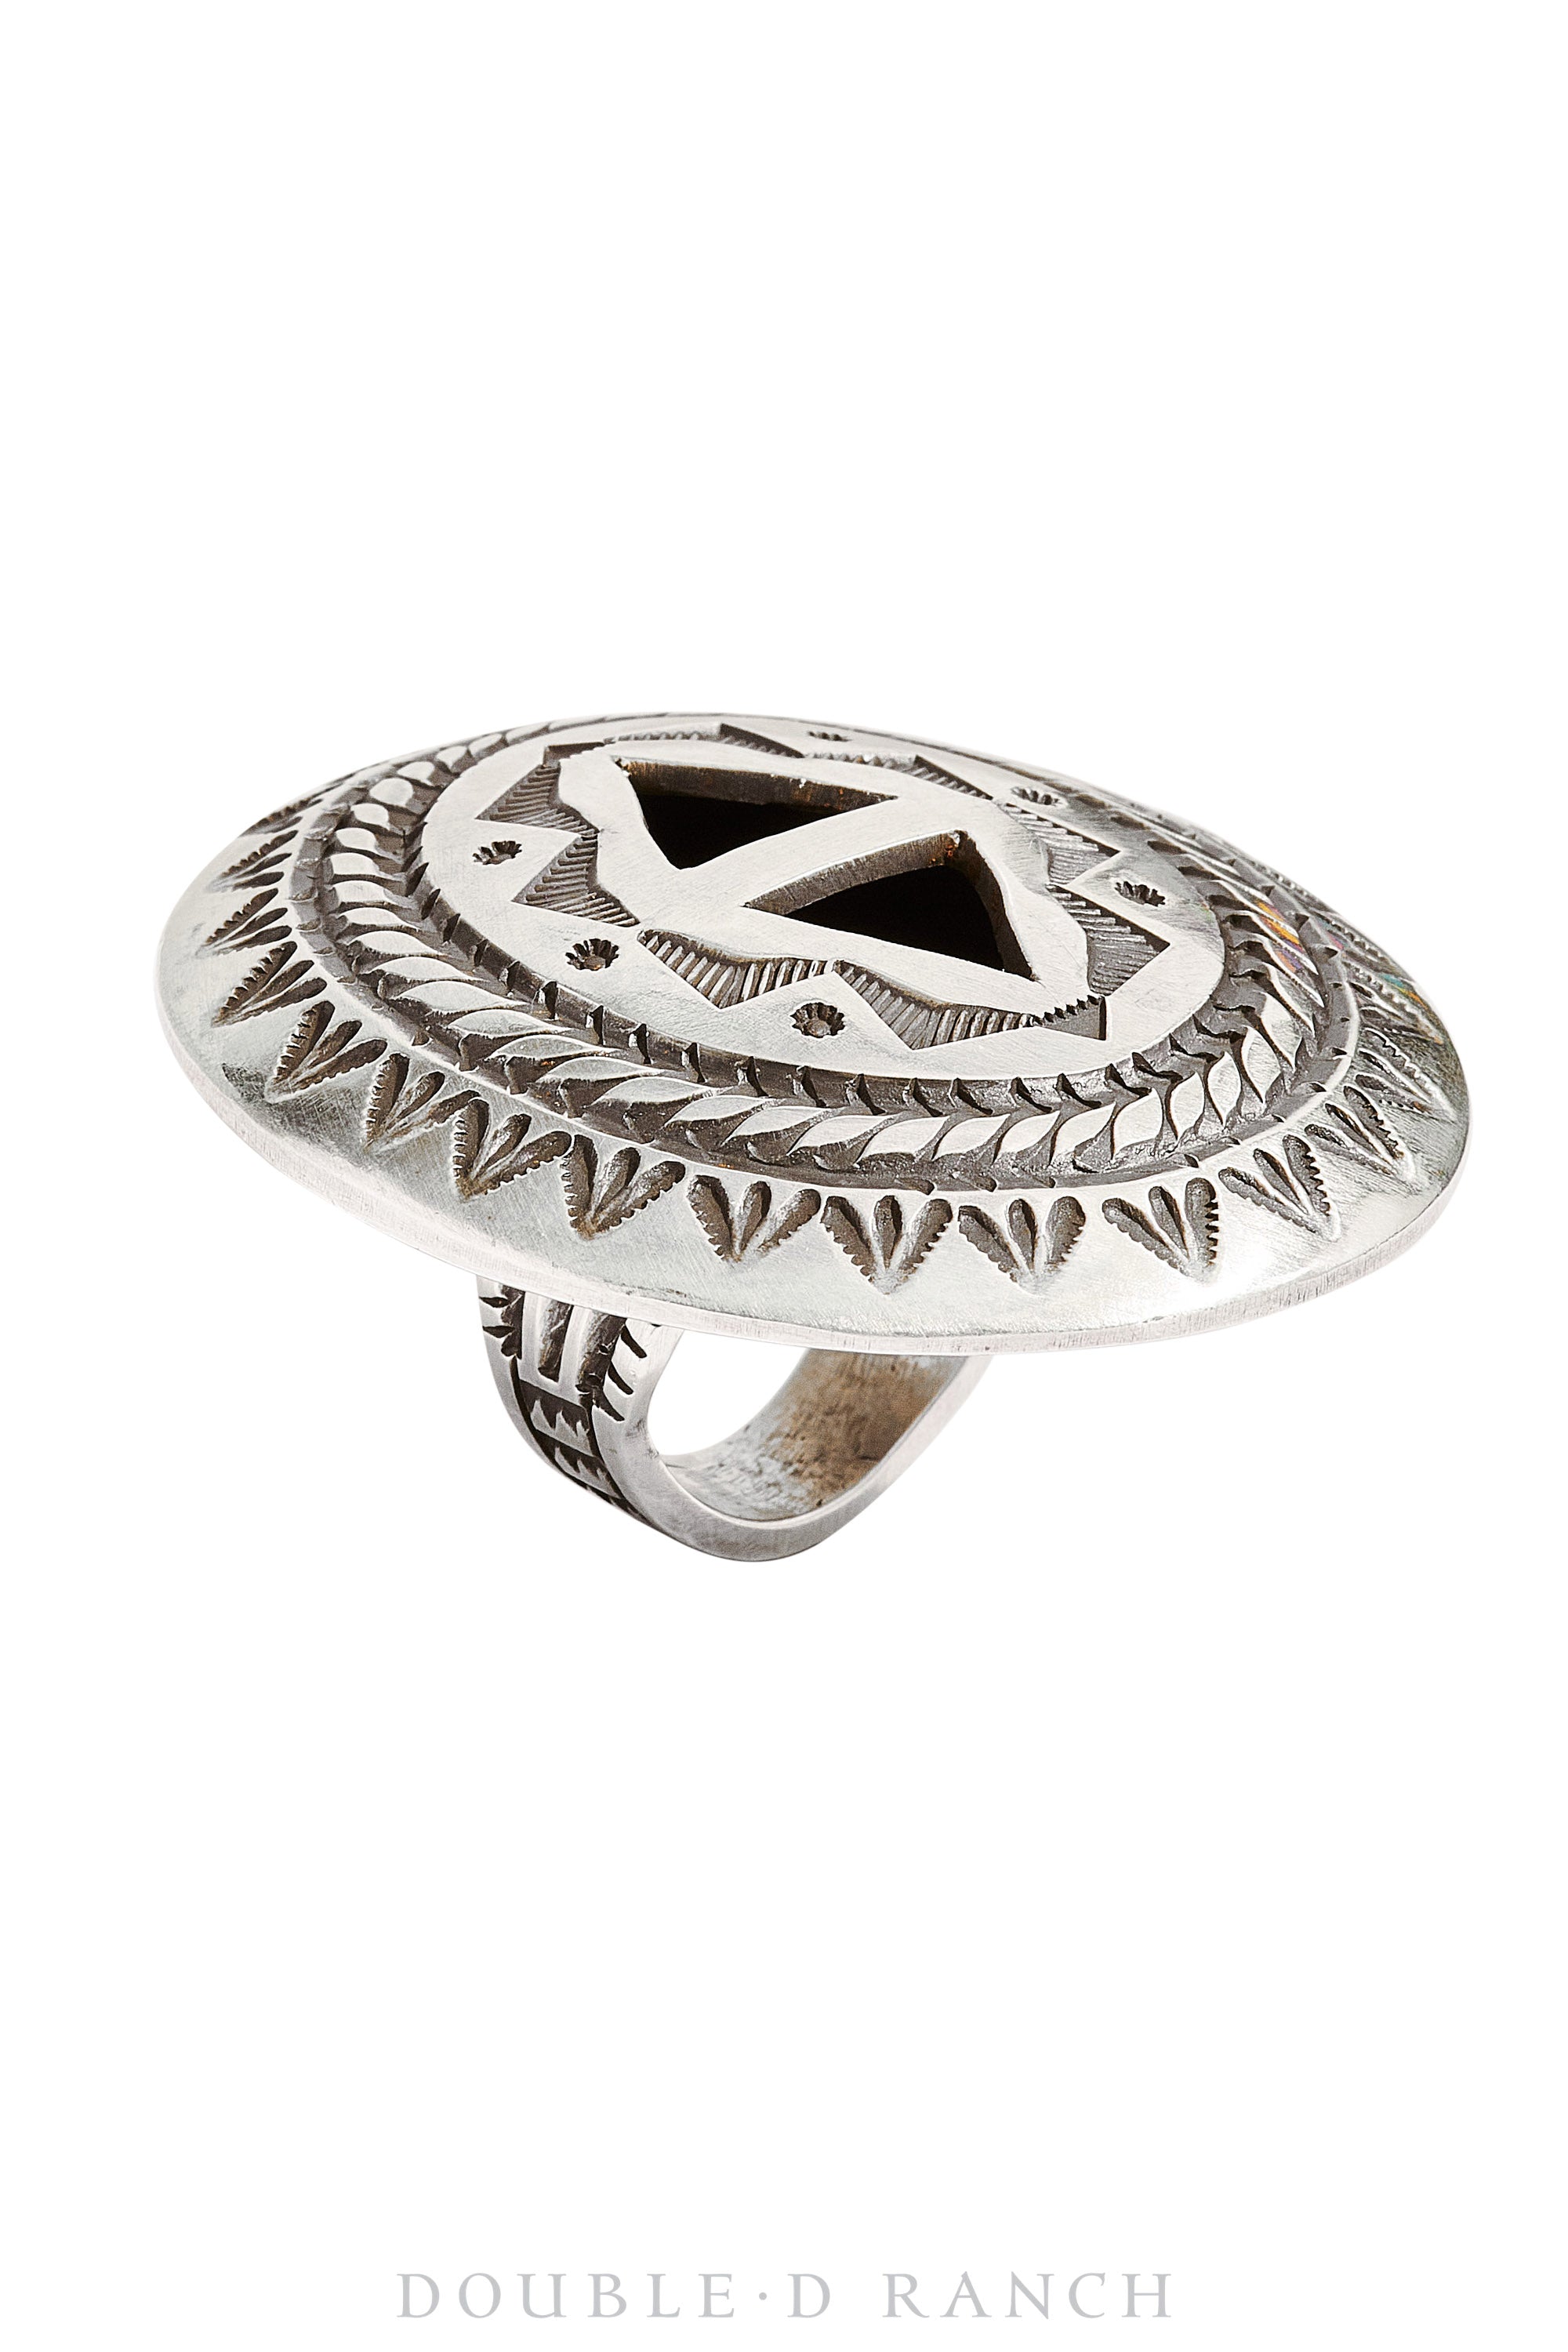 Ring, Concho, Sterling Silver, Hallmark, Contemporary, 1107